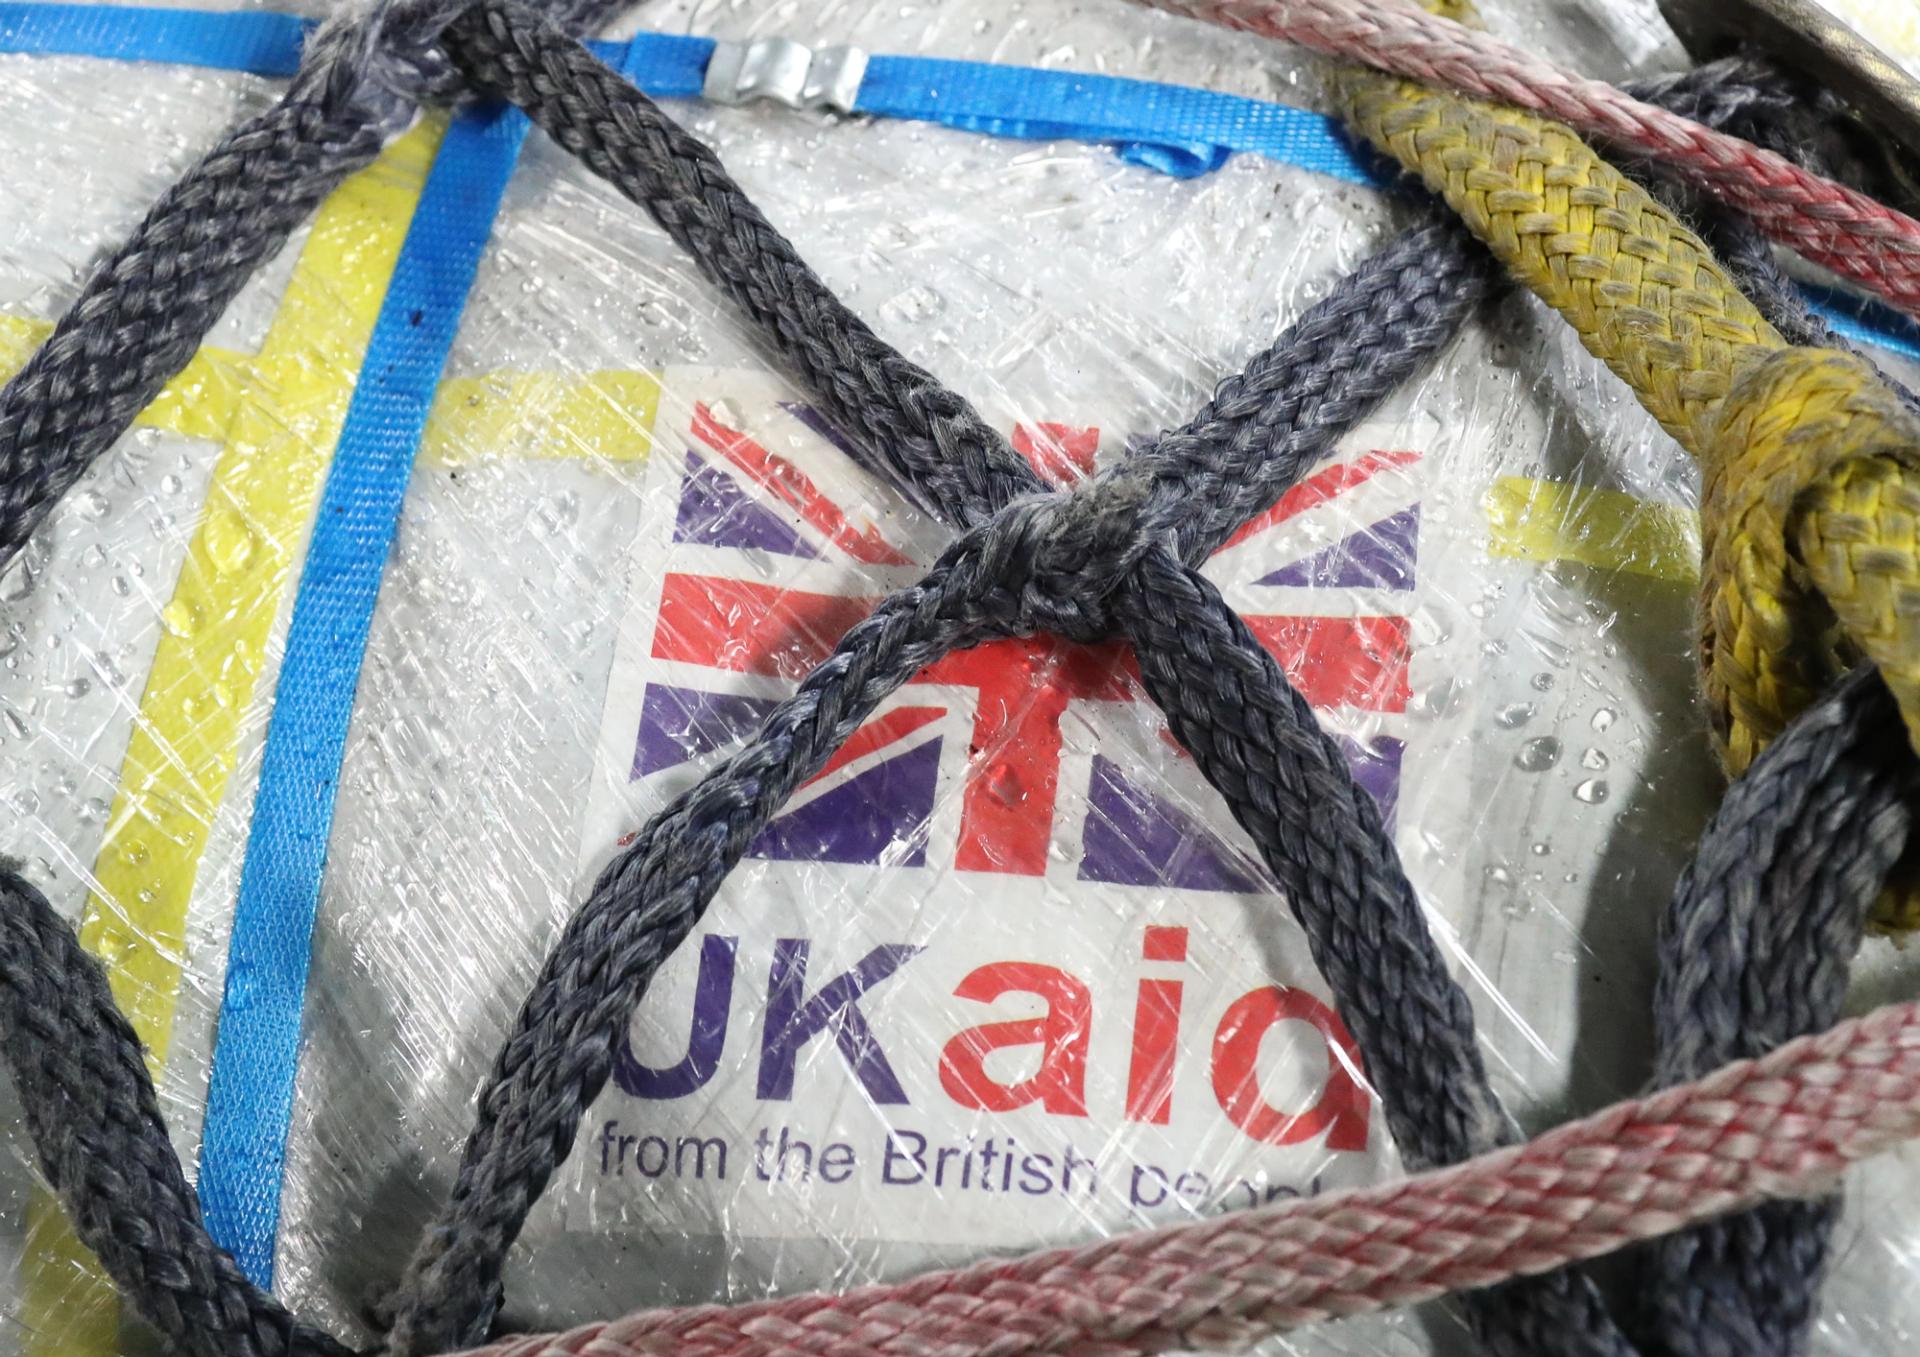 UK aid logo on cargo package